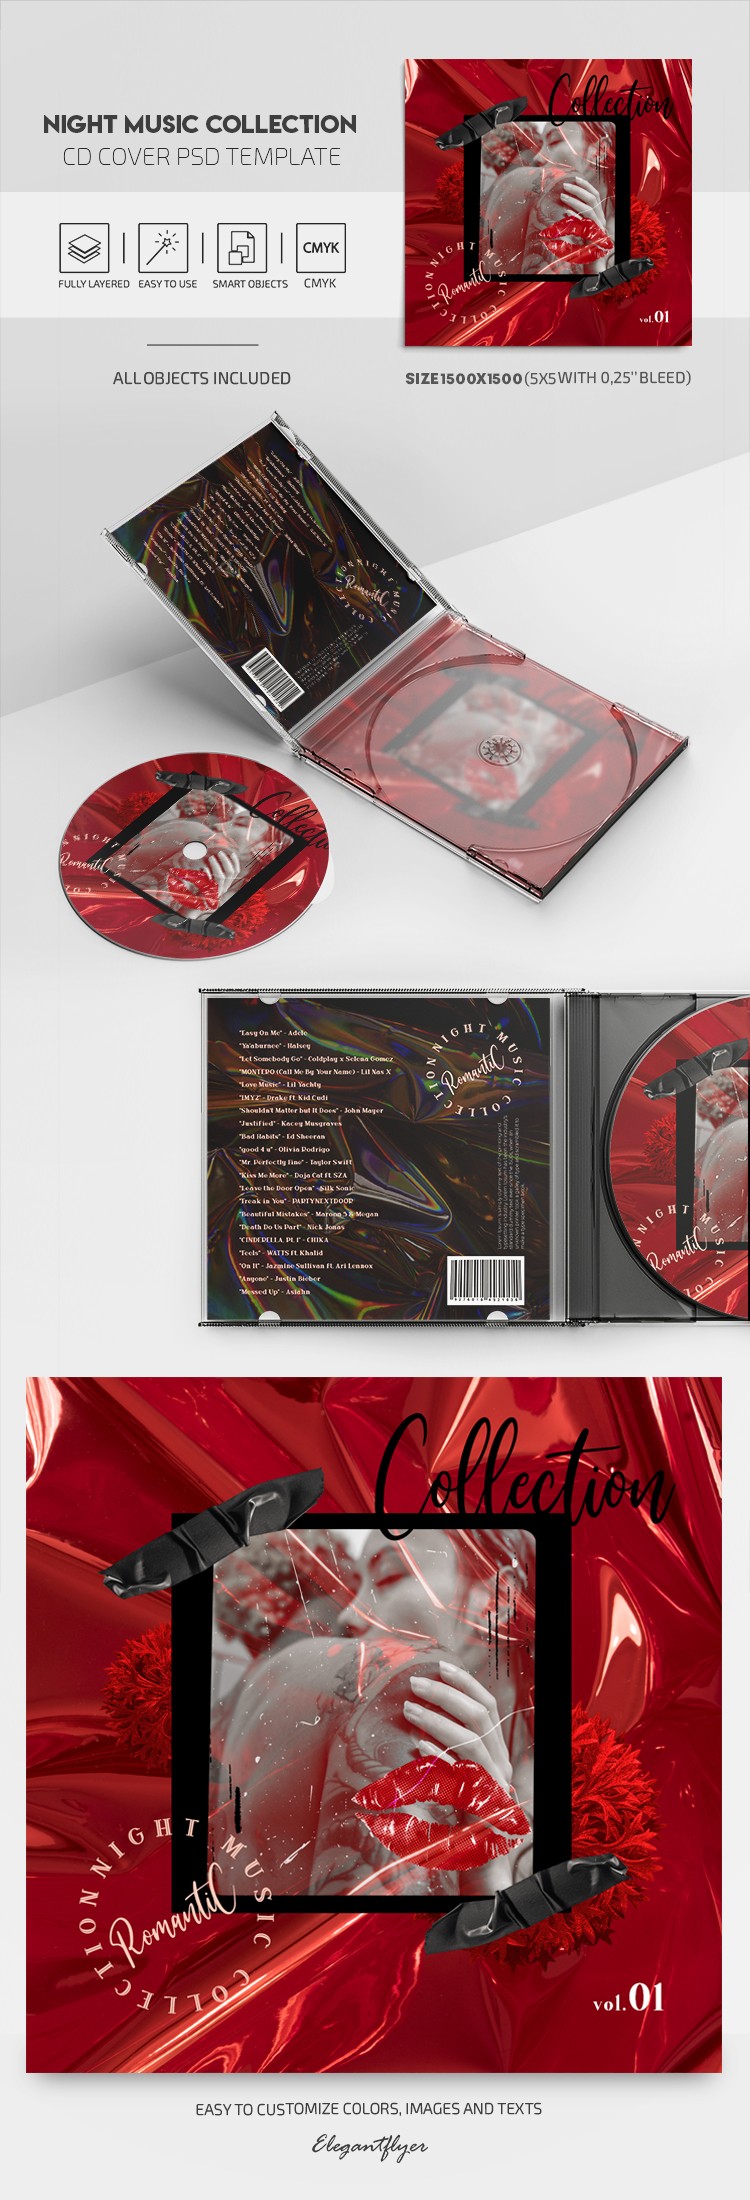 Nacht Musik-Sammlung CD Cover by ElegantFlyer